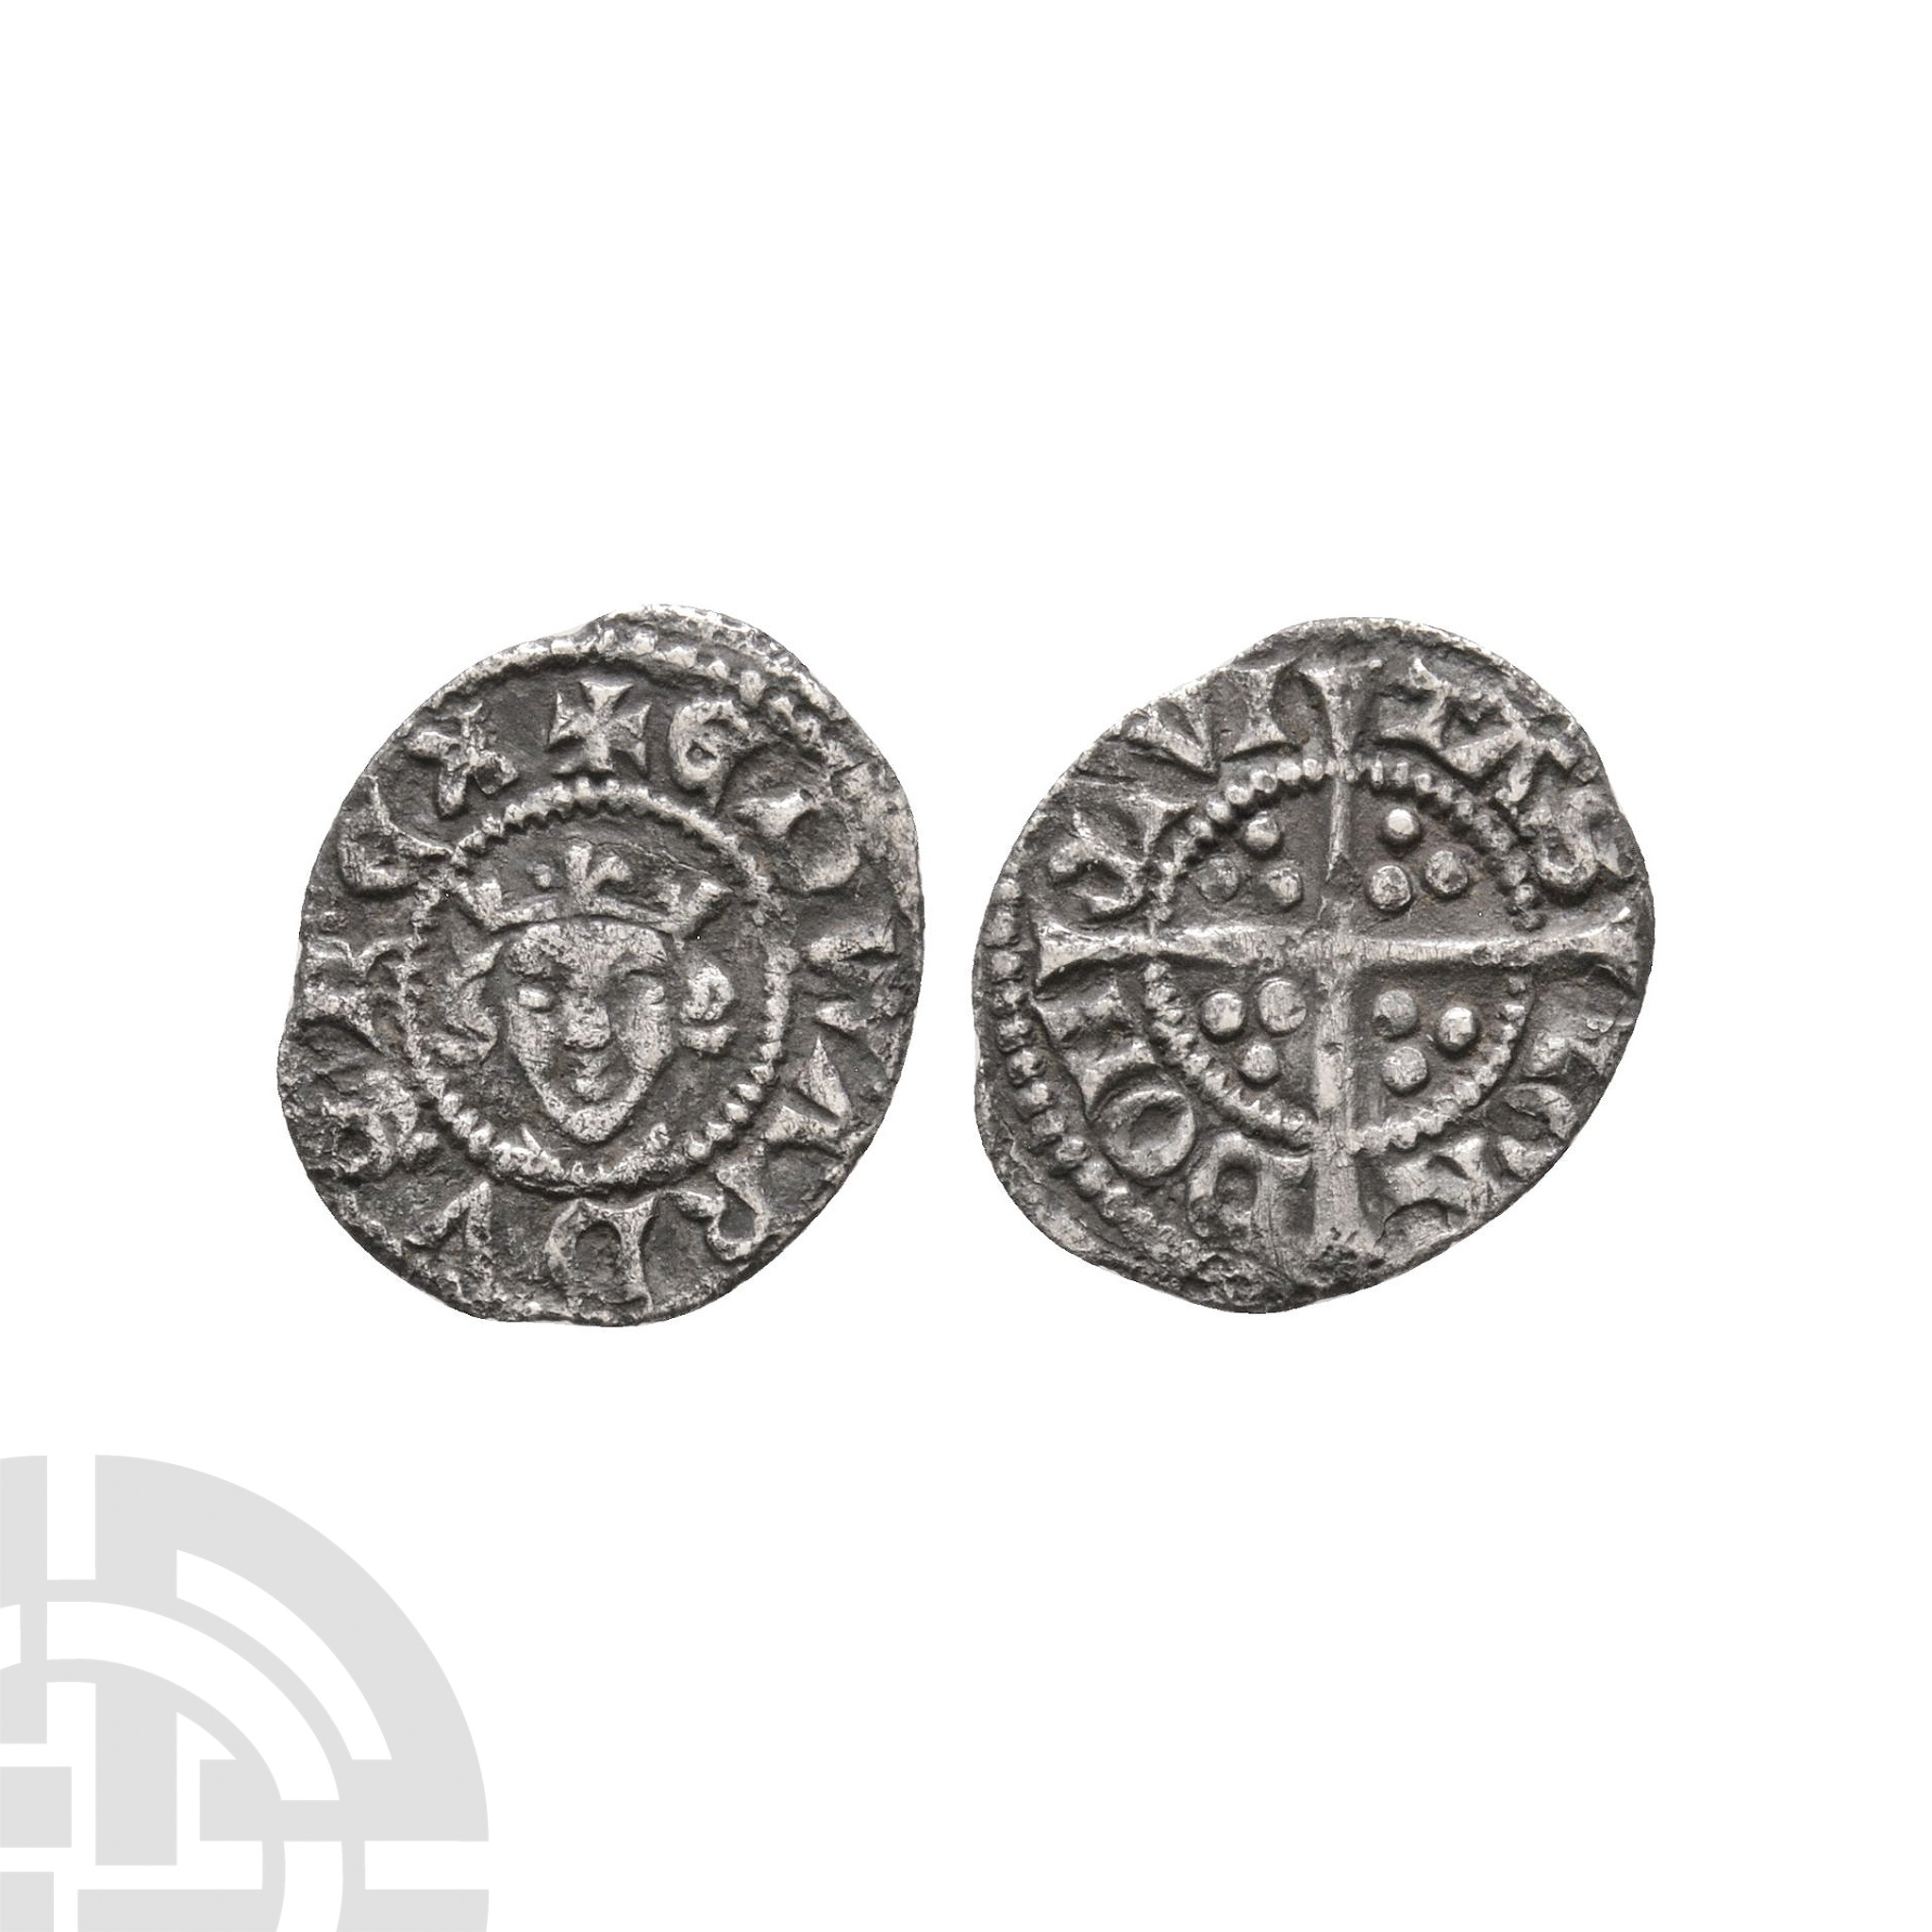 English Medieval Coins - Edward I - London - AR Long Cross Farthing